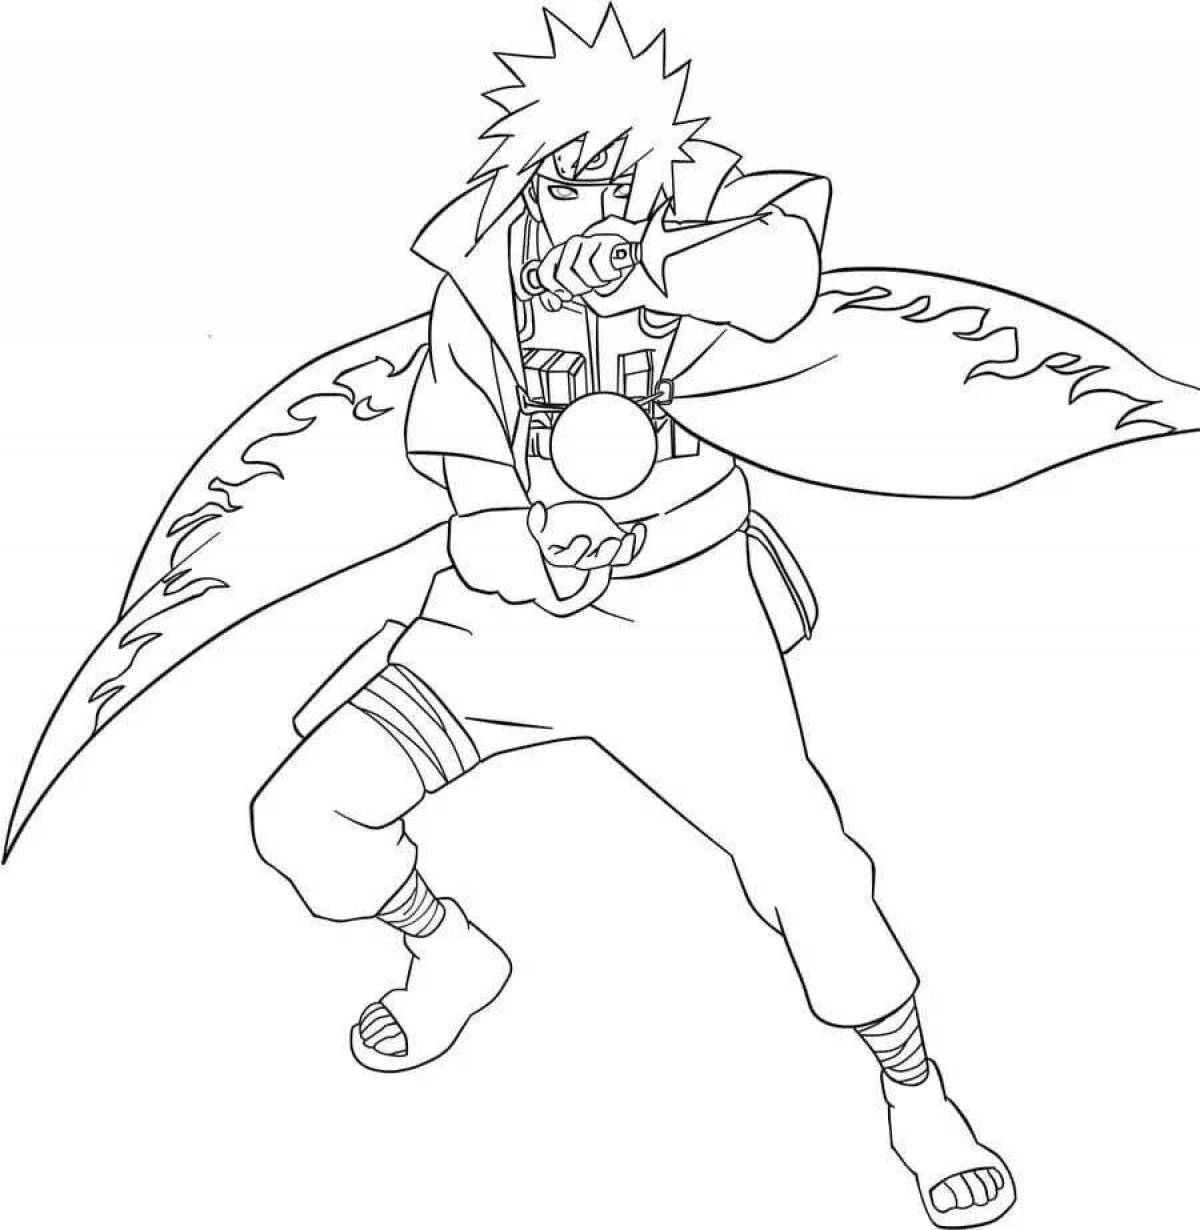 Naruto animated character coloring page